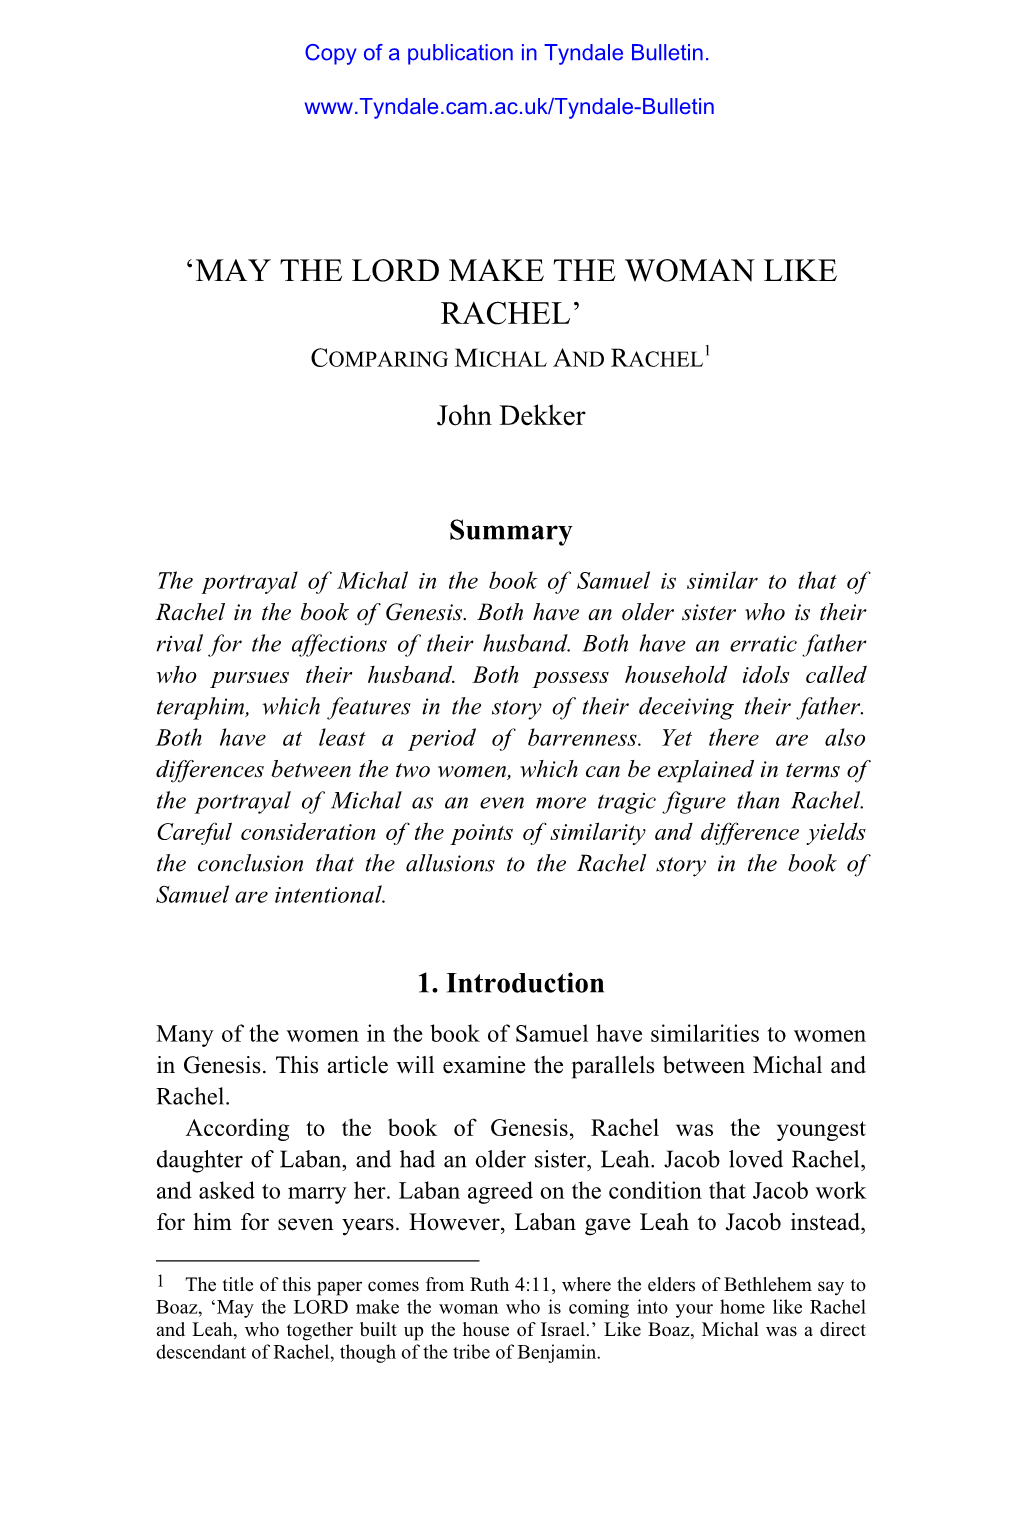 'May the Lord Make the Woman Like Rachel'